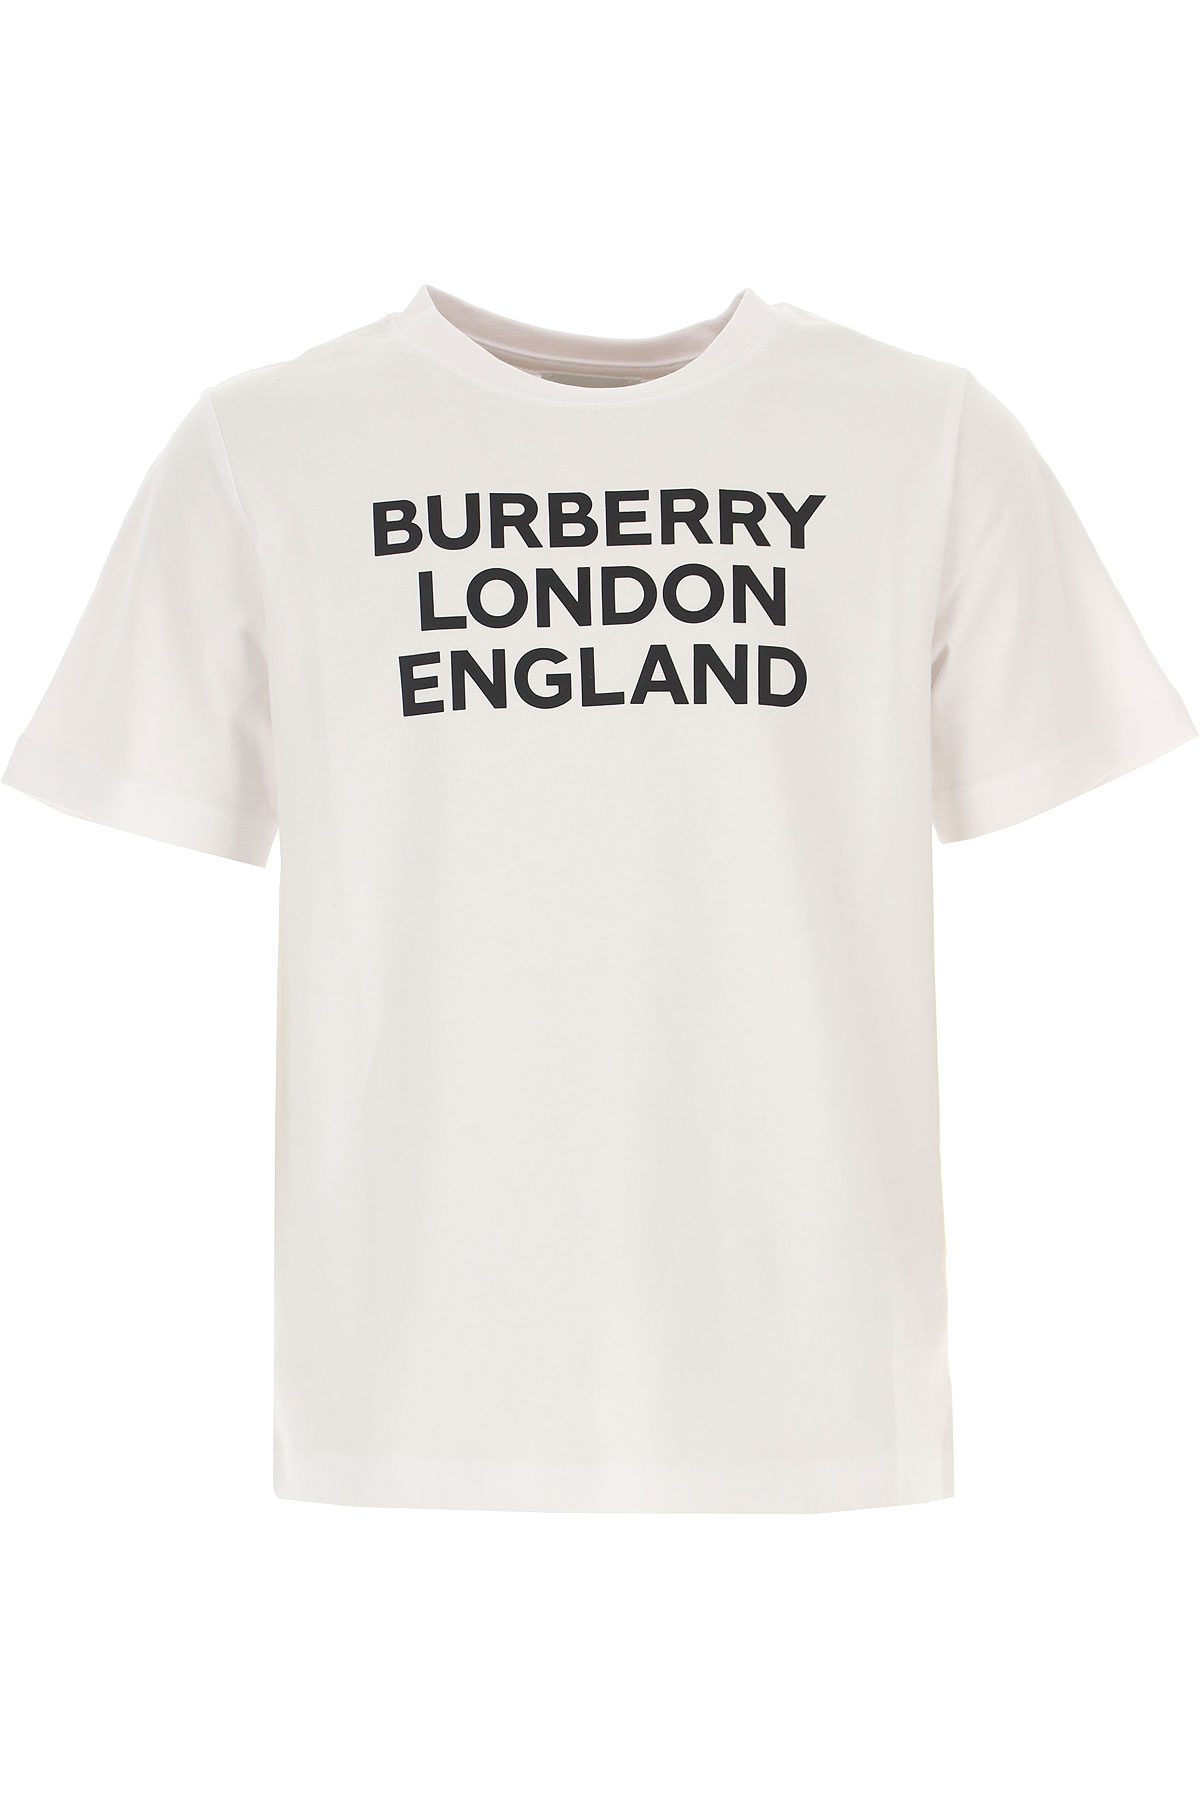 Kidswear Burberry, Style code: 8028811-a1464-